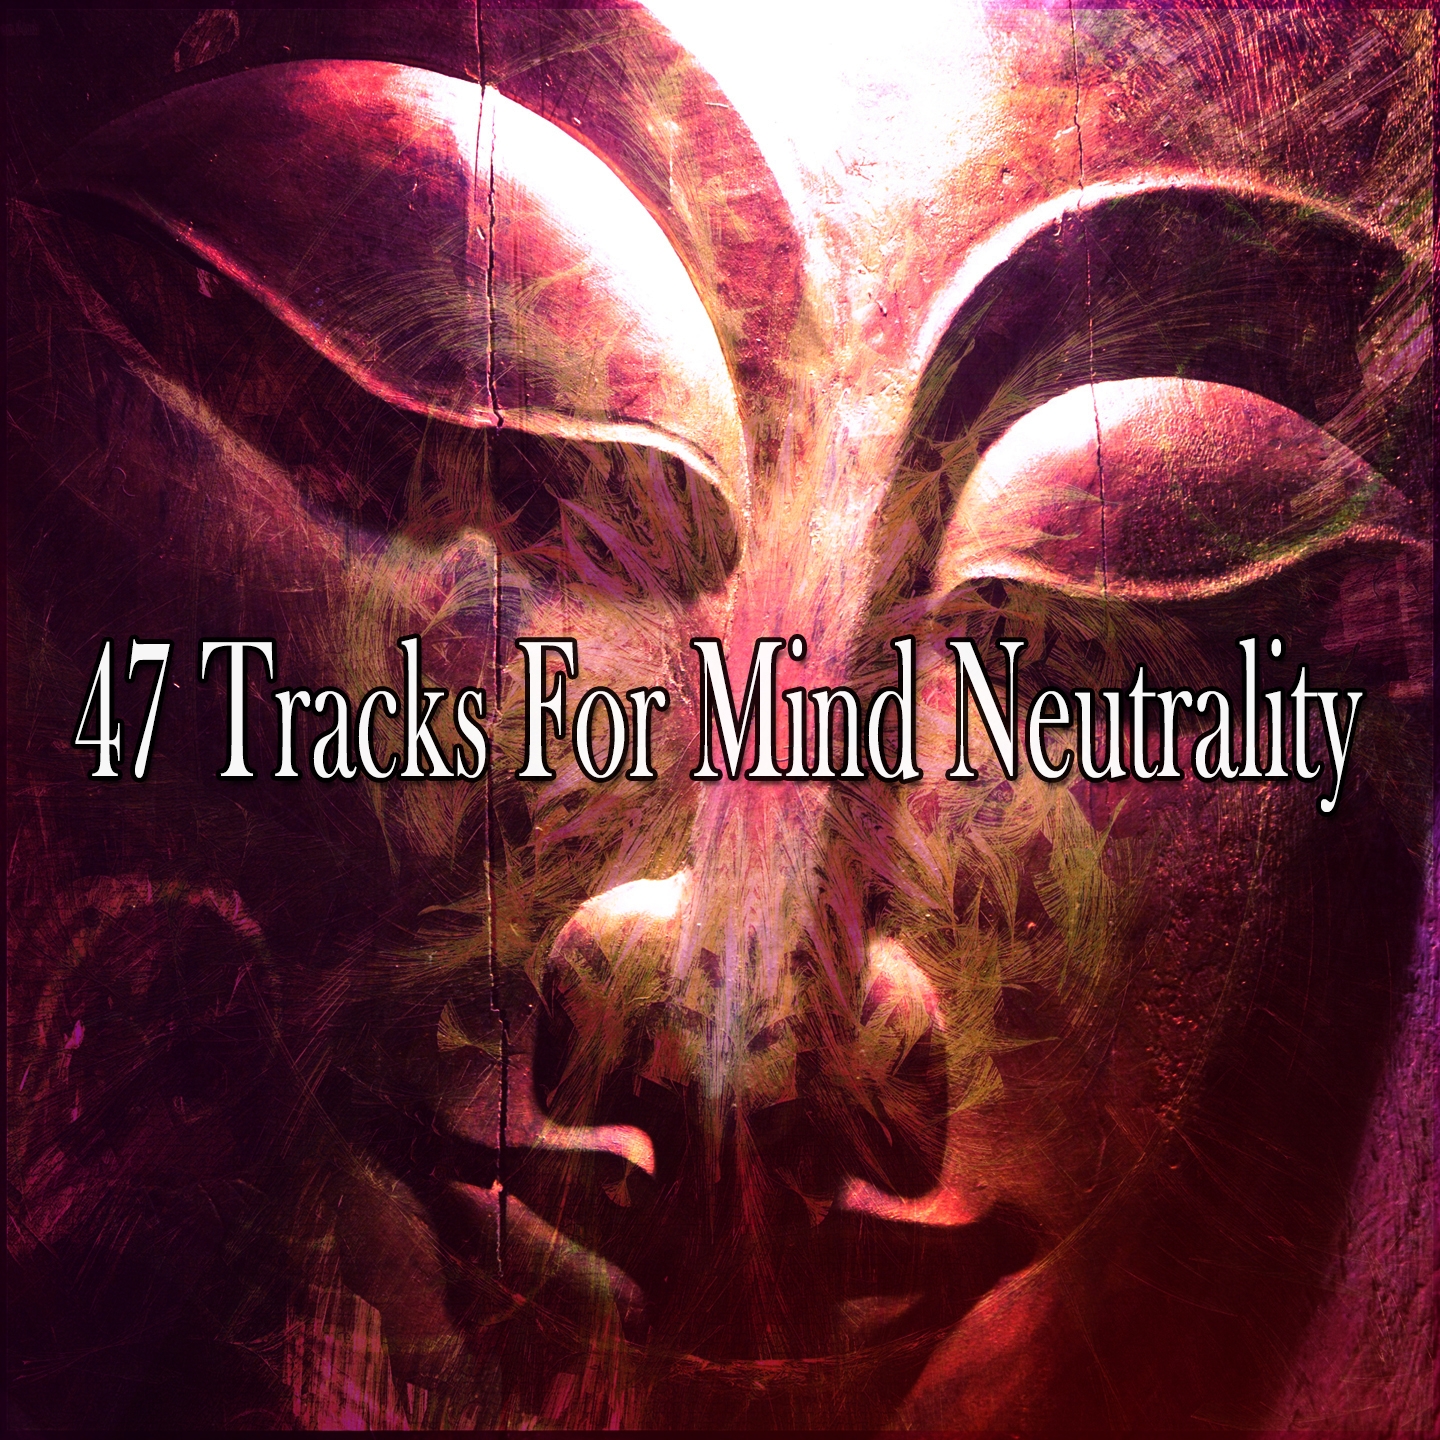 47 Tracks For Mind Neutrality